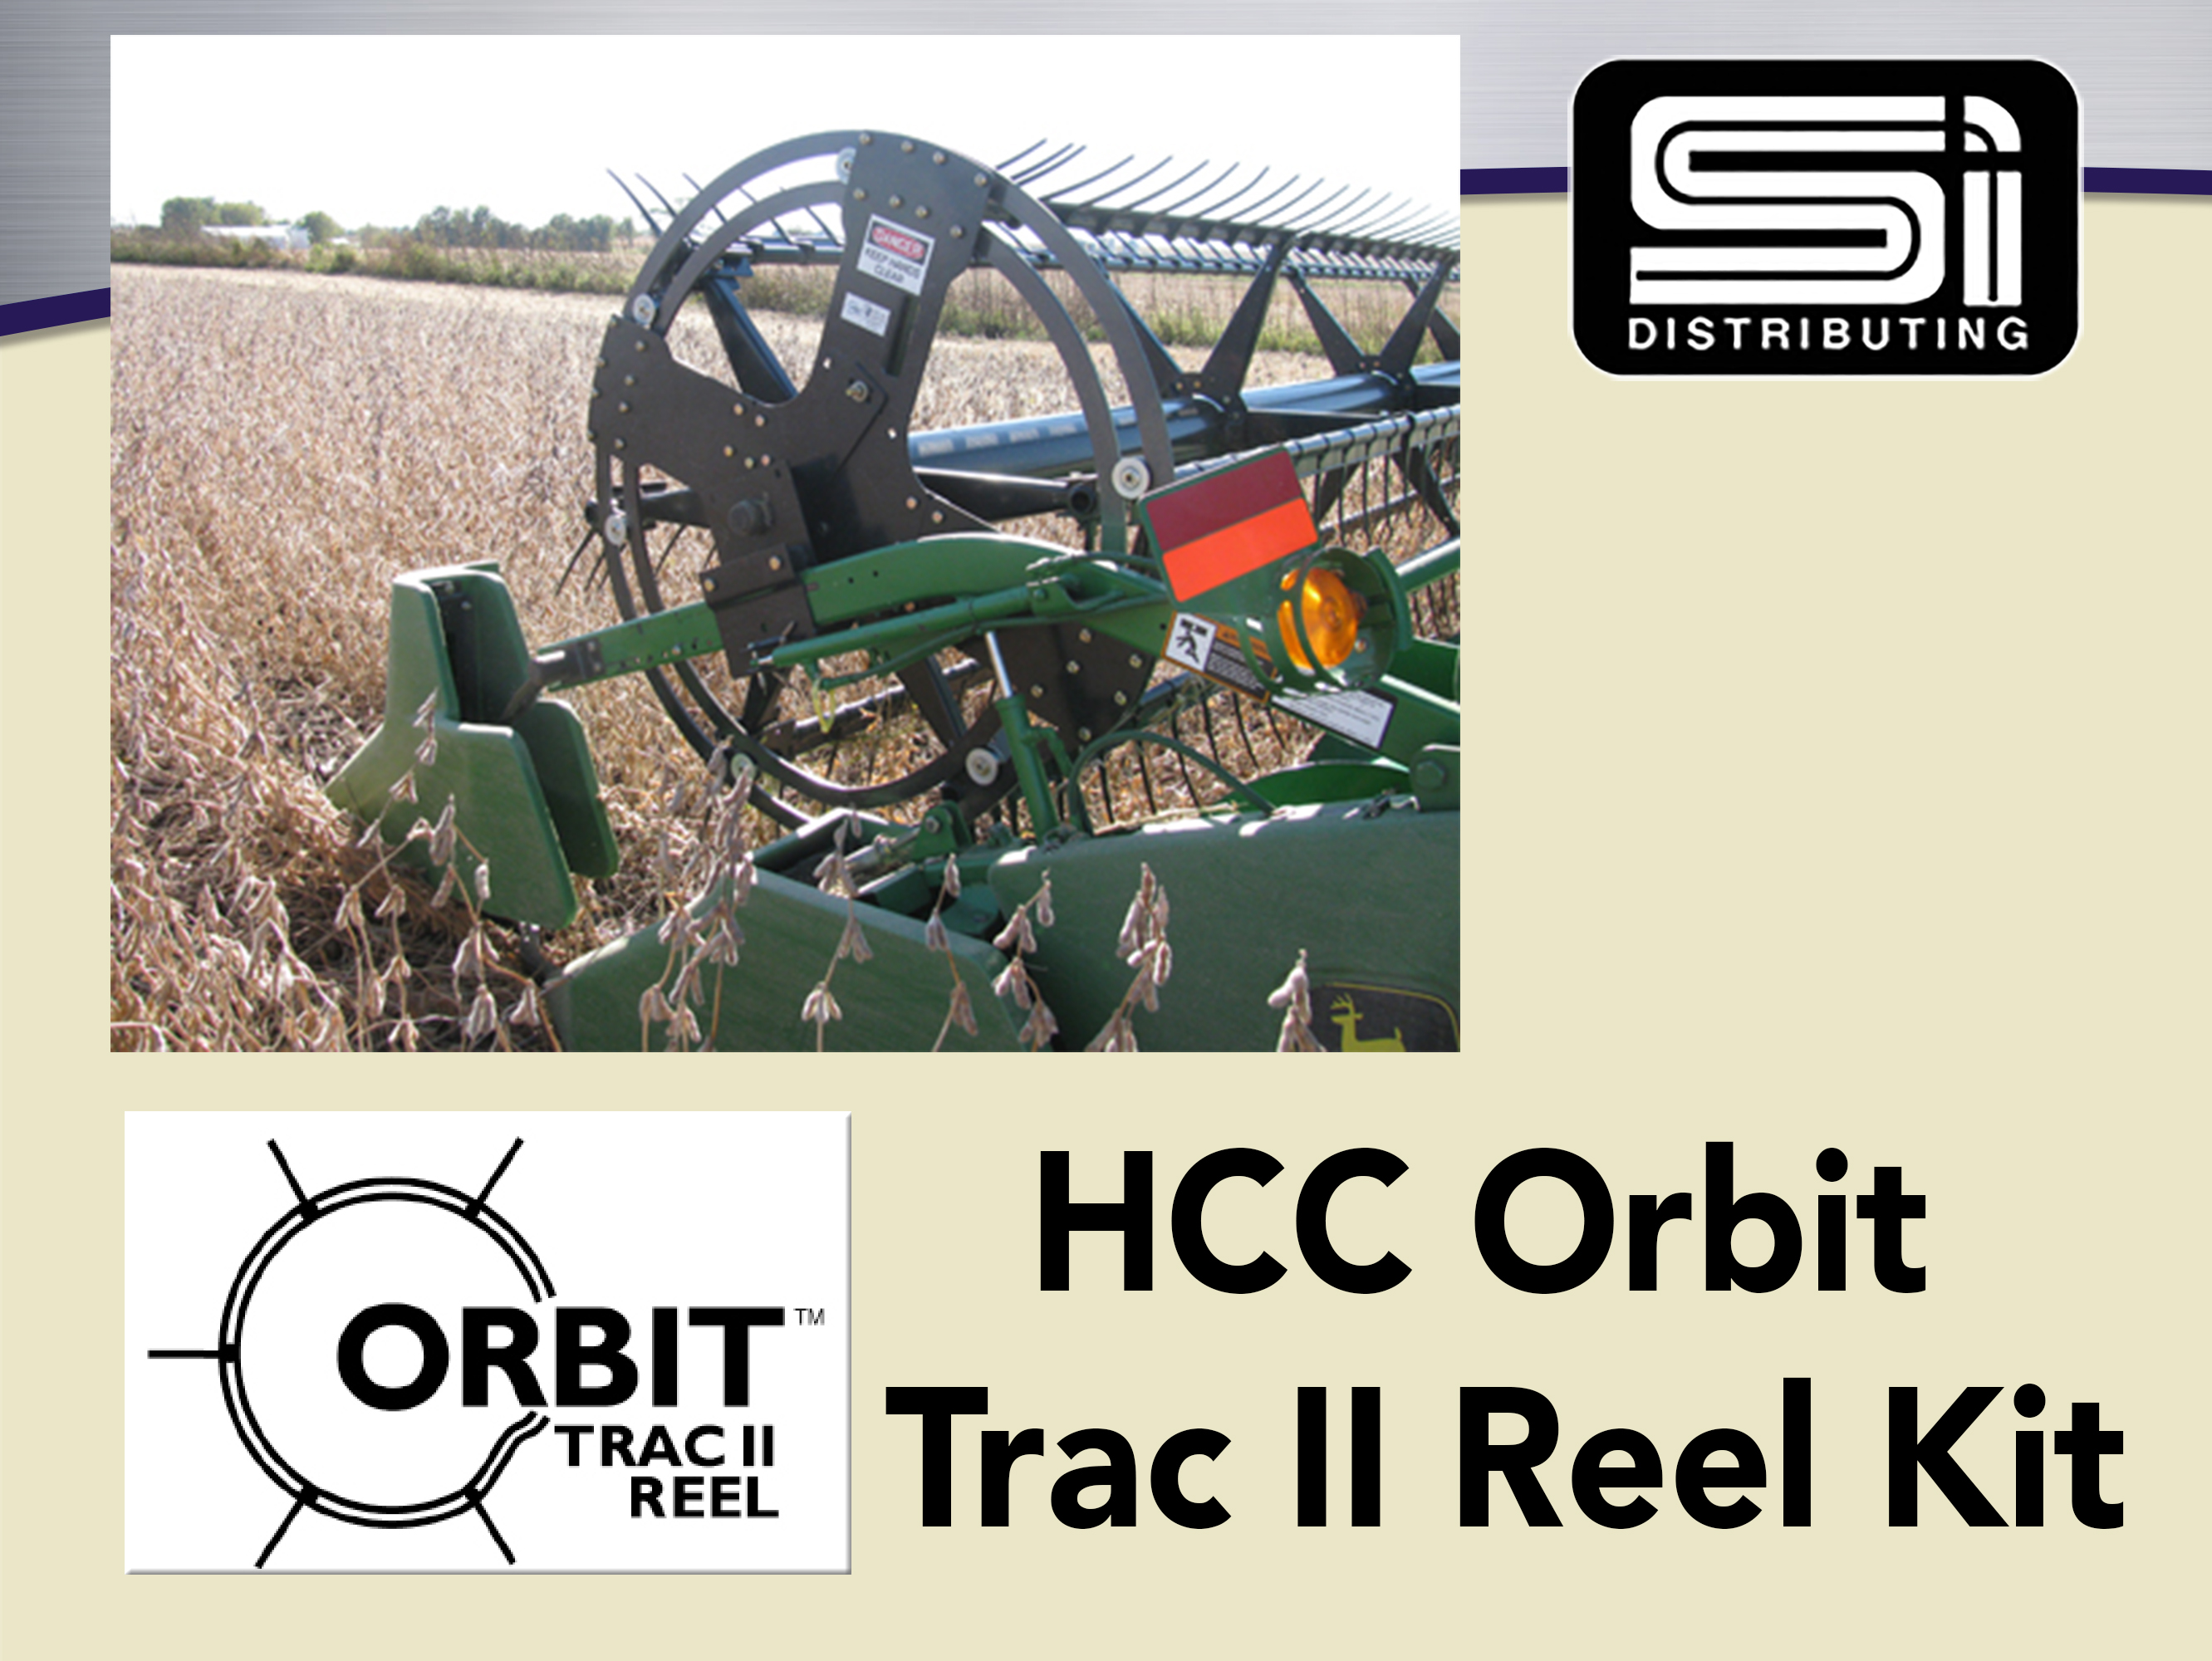 HCC orbit reel kit video